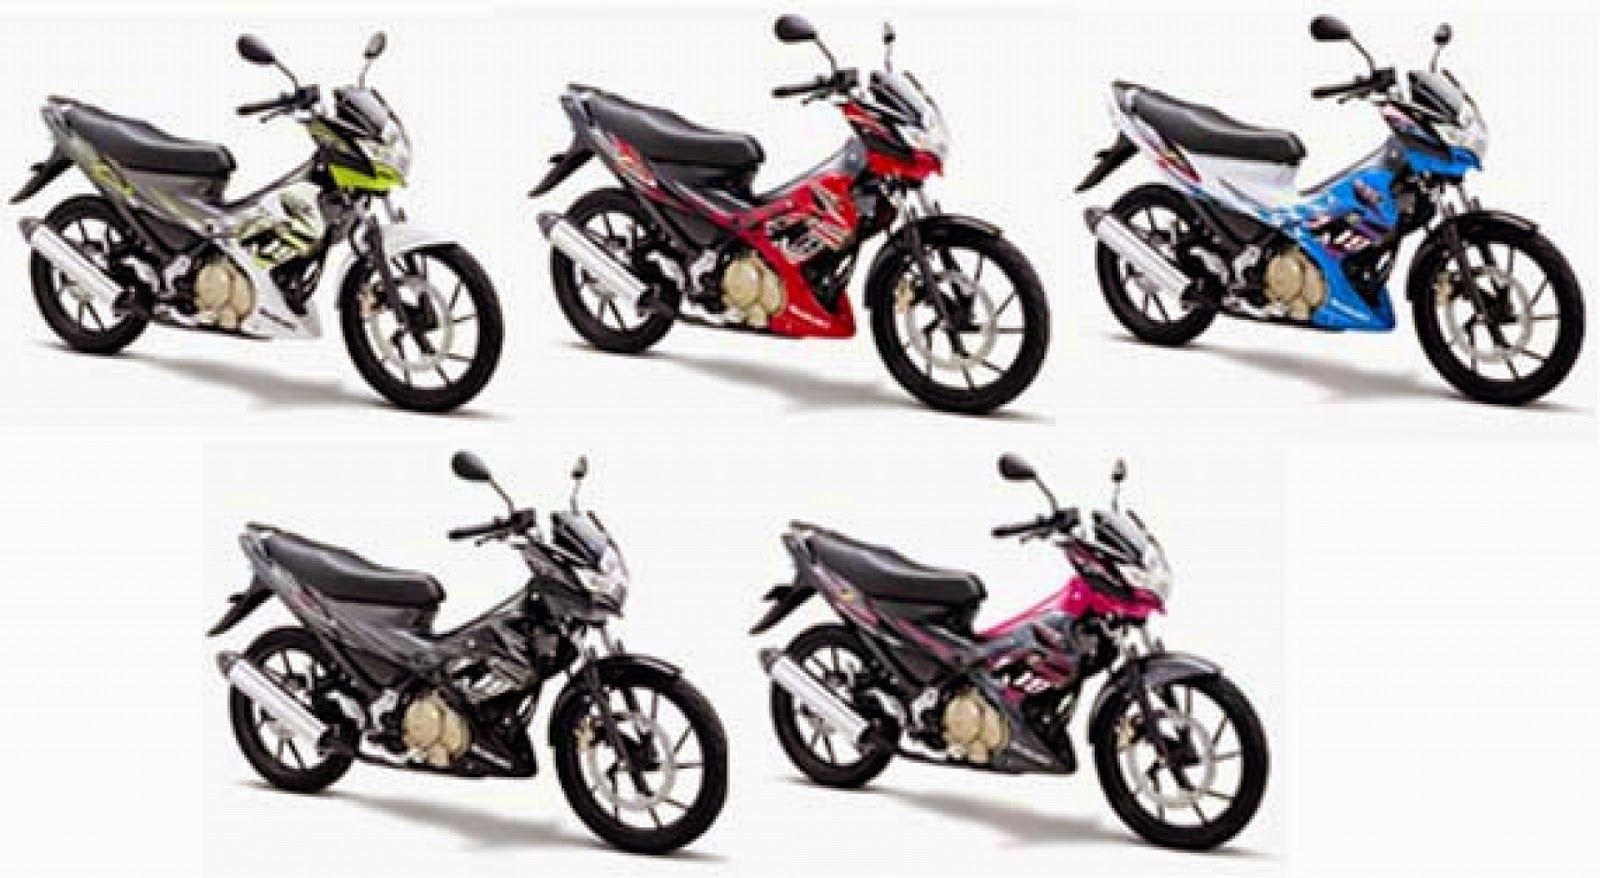 Kumpulan Gambar Sepeda Motor Suzuki Satria Terbaru Terlengkap